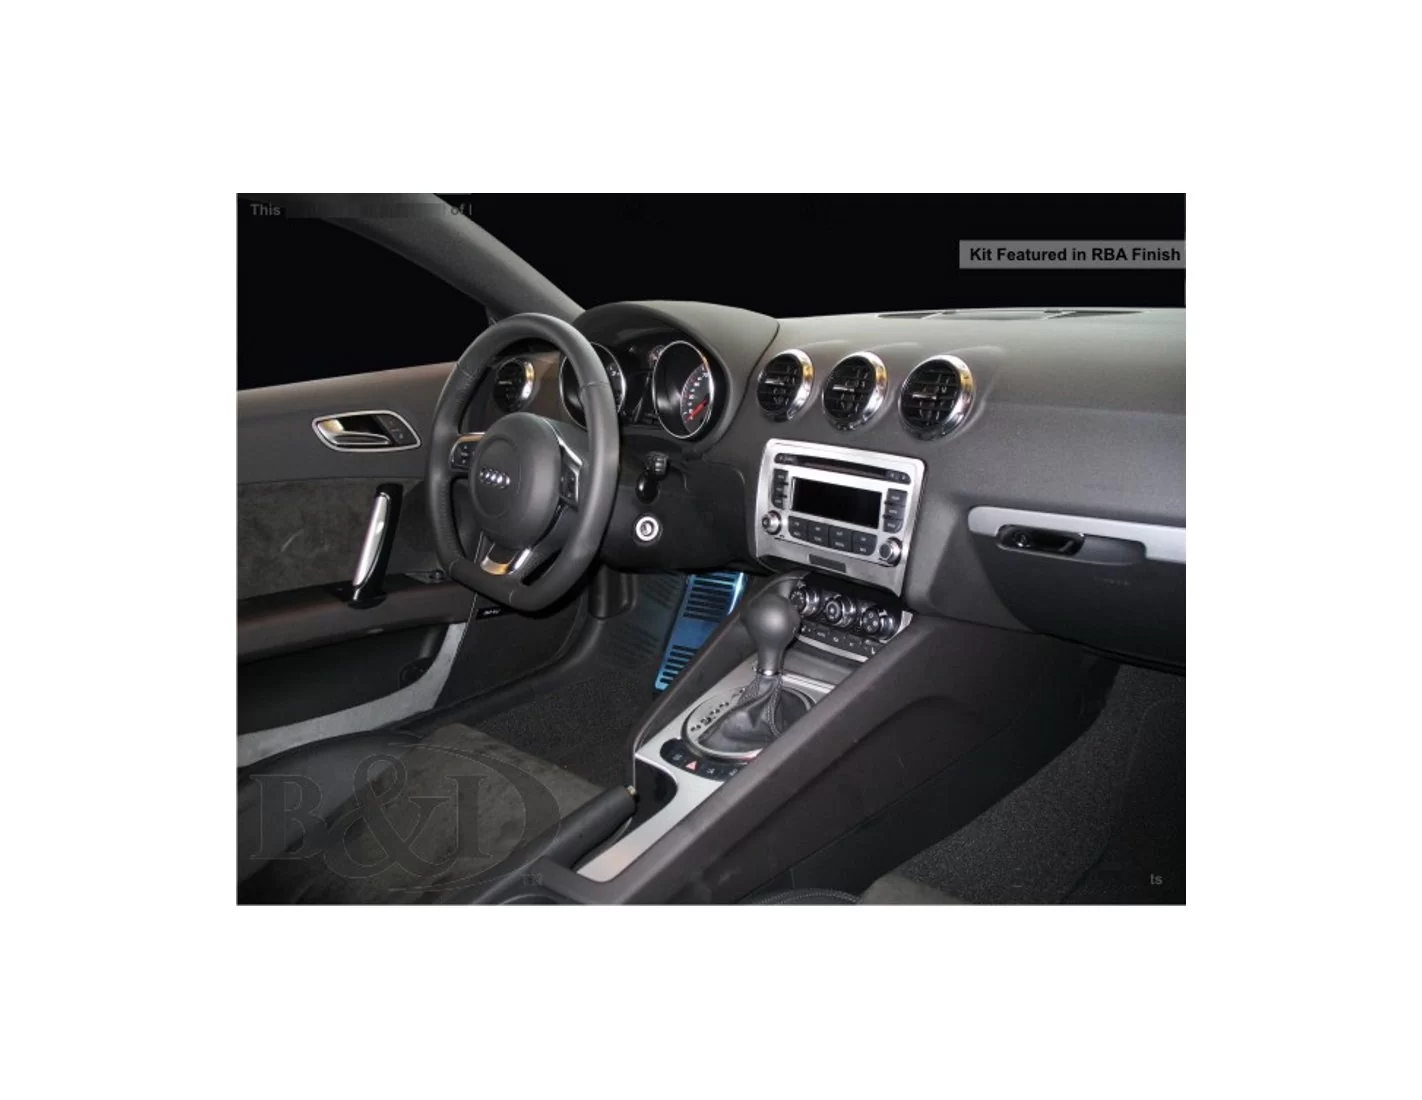 Audi TT 2007-2014 Voll Satz, Without NAVI BD innenausstattung armaturendekor cockpit dekor - 1- Cockpit Dekor Innenraum